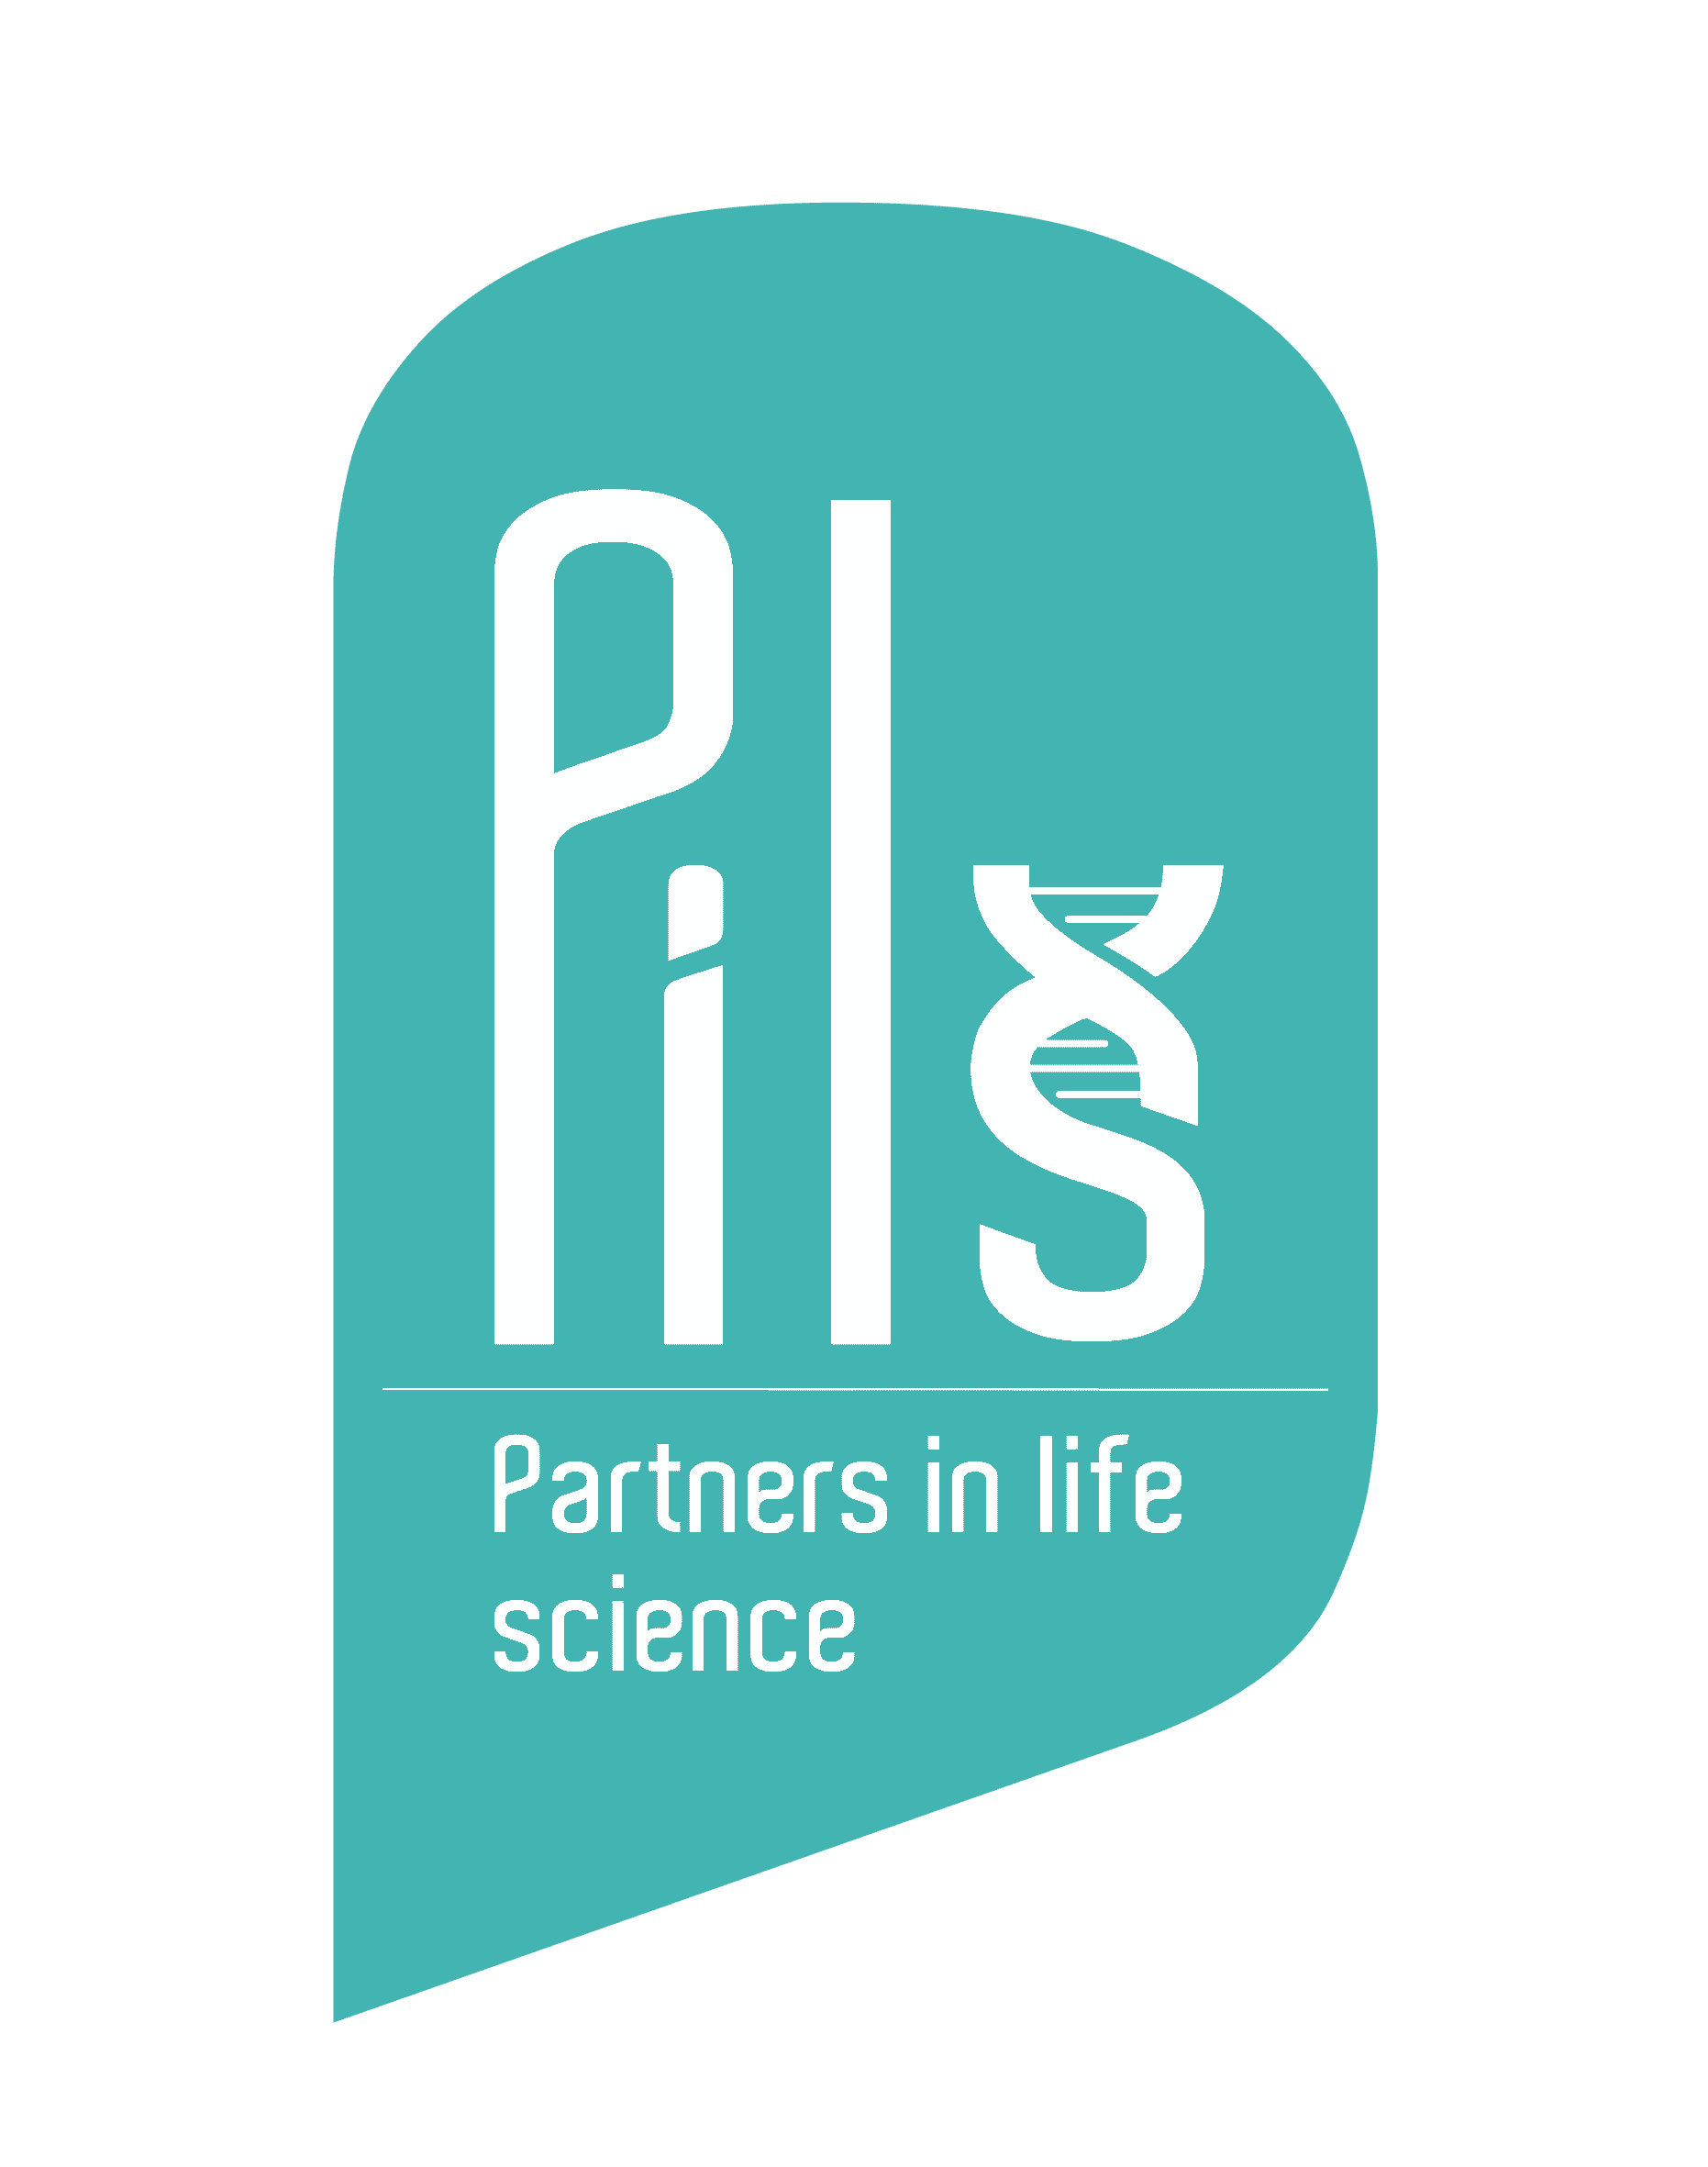 Pils, Partner in Life Science logo